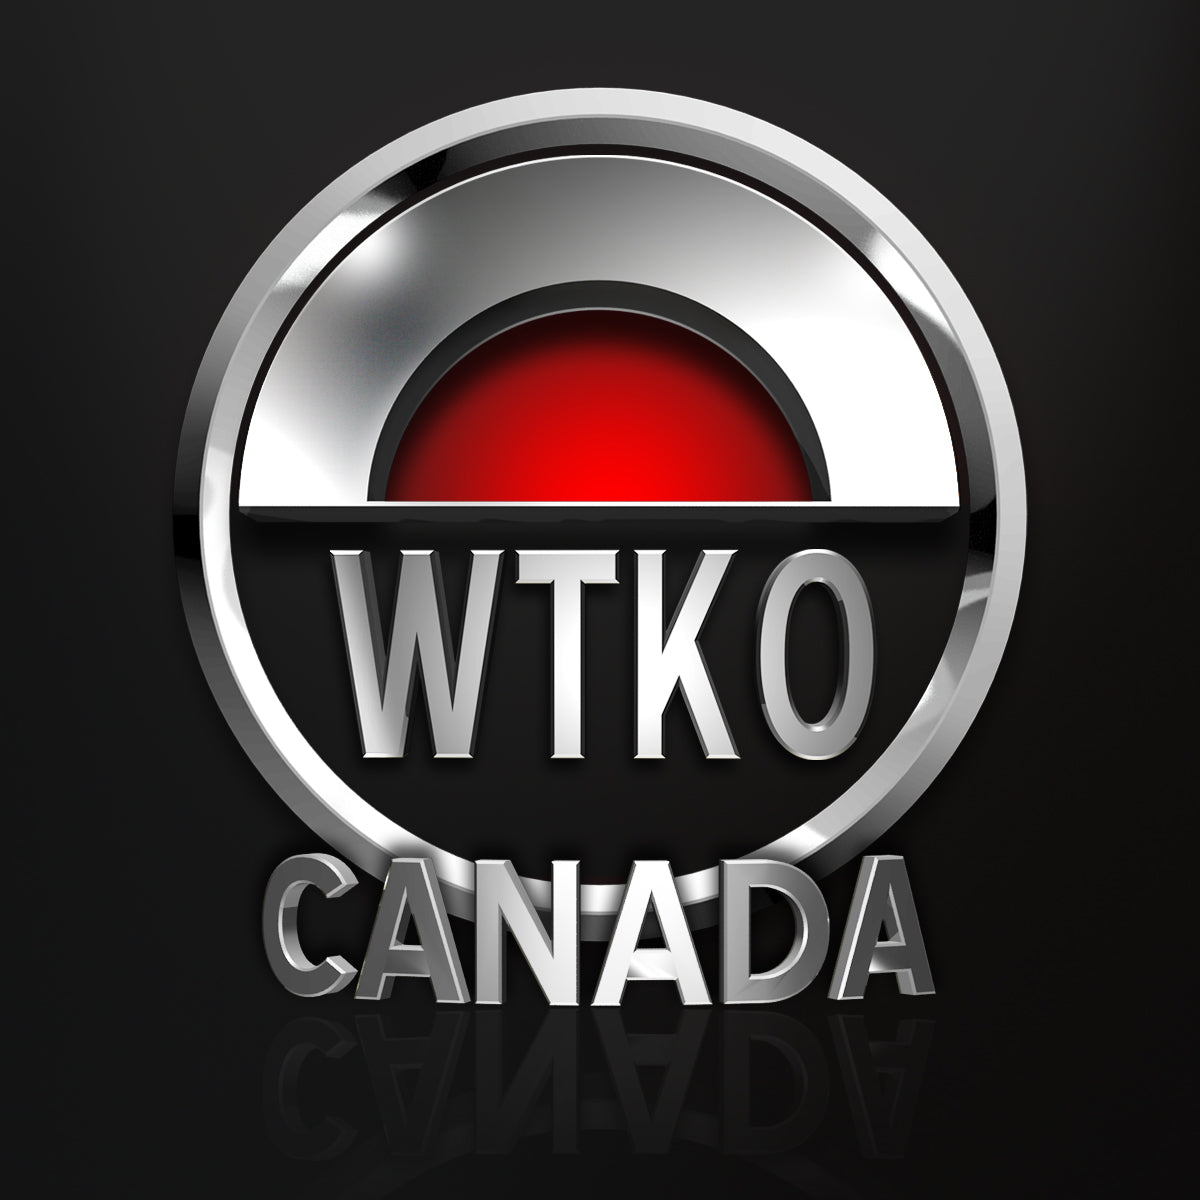 WTKO logo